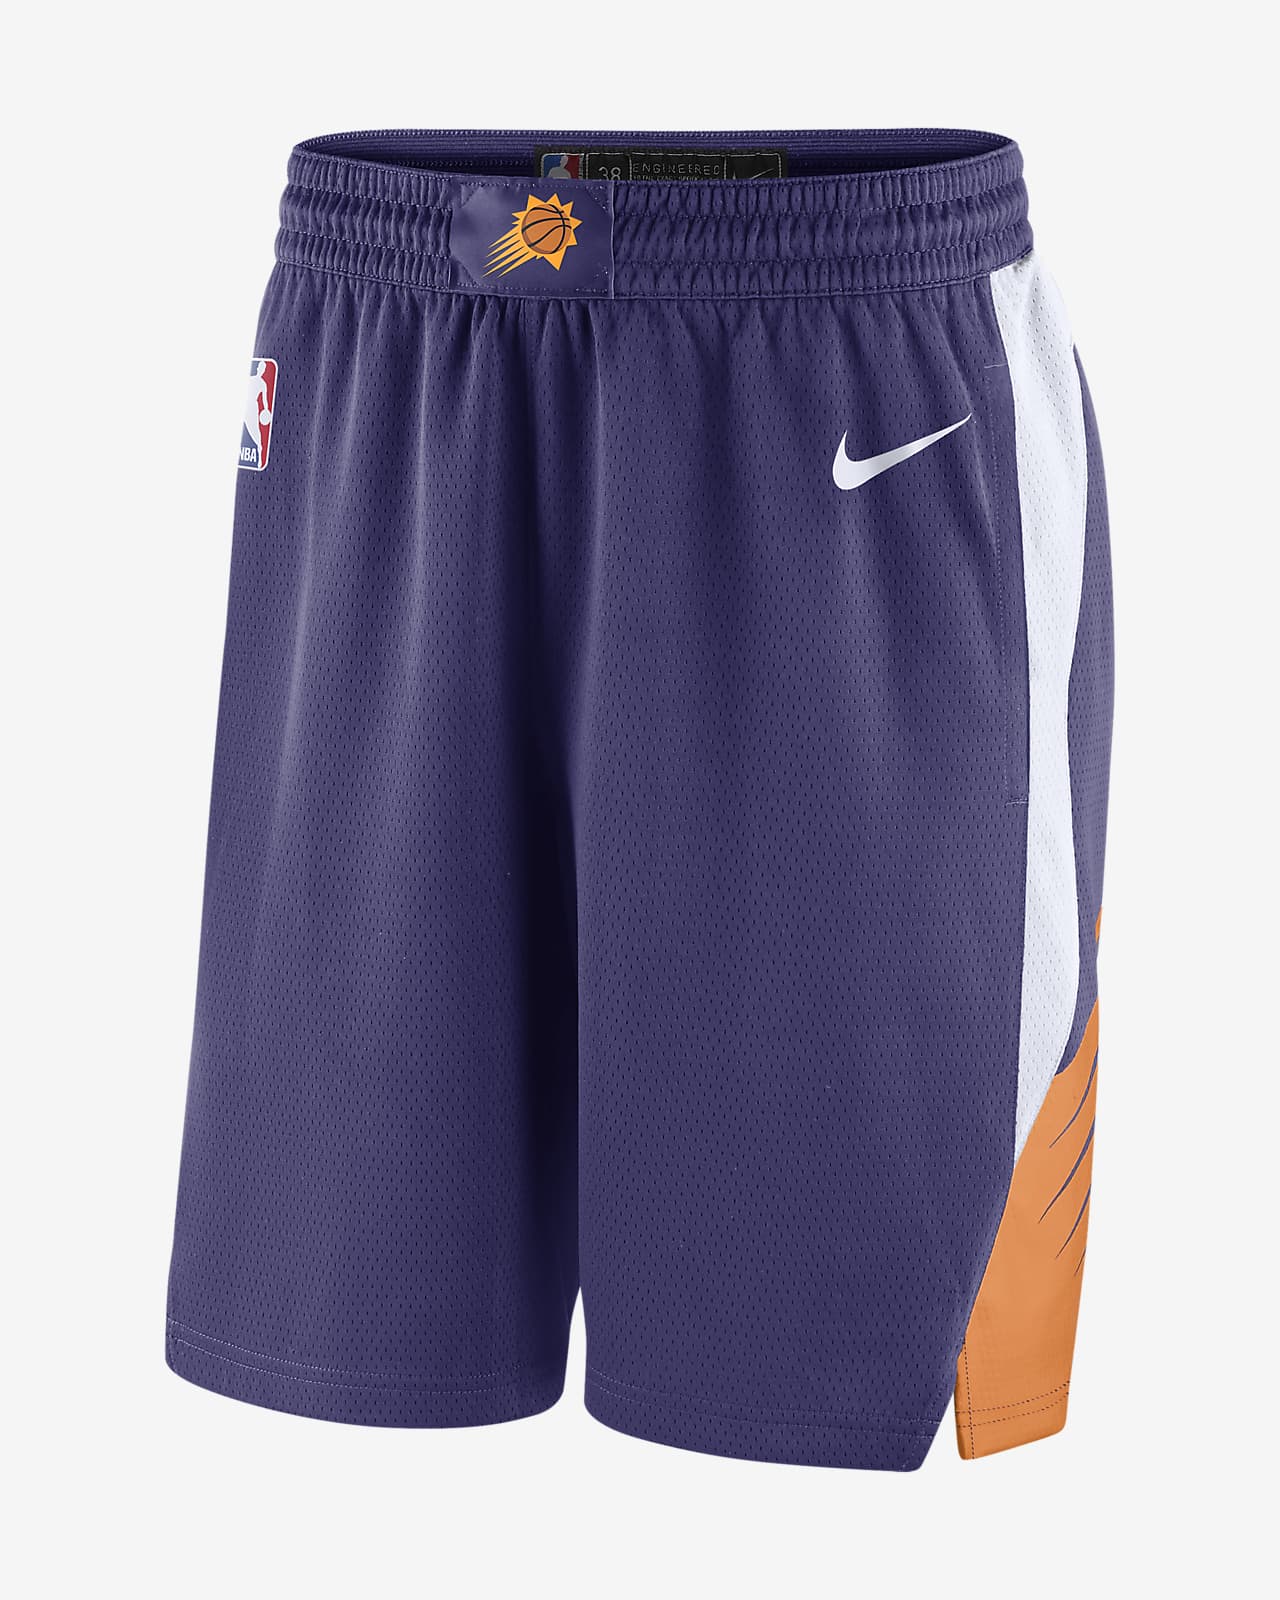 phoenix suns basketball shorts